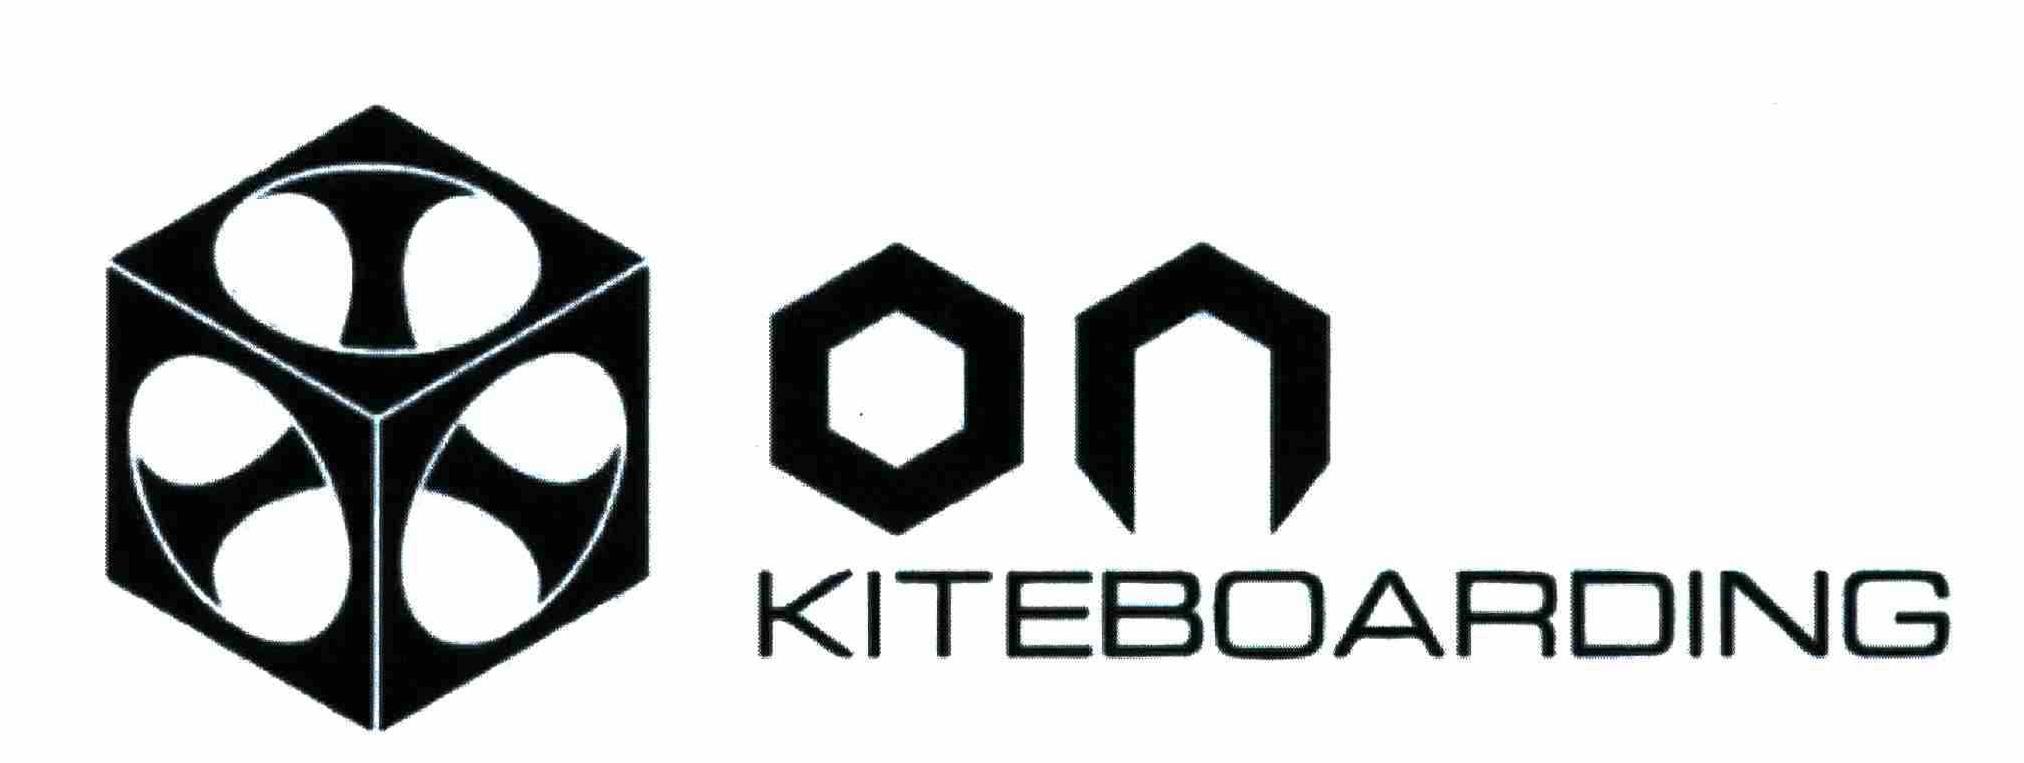 on kiteboarding logo